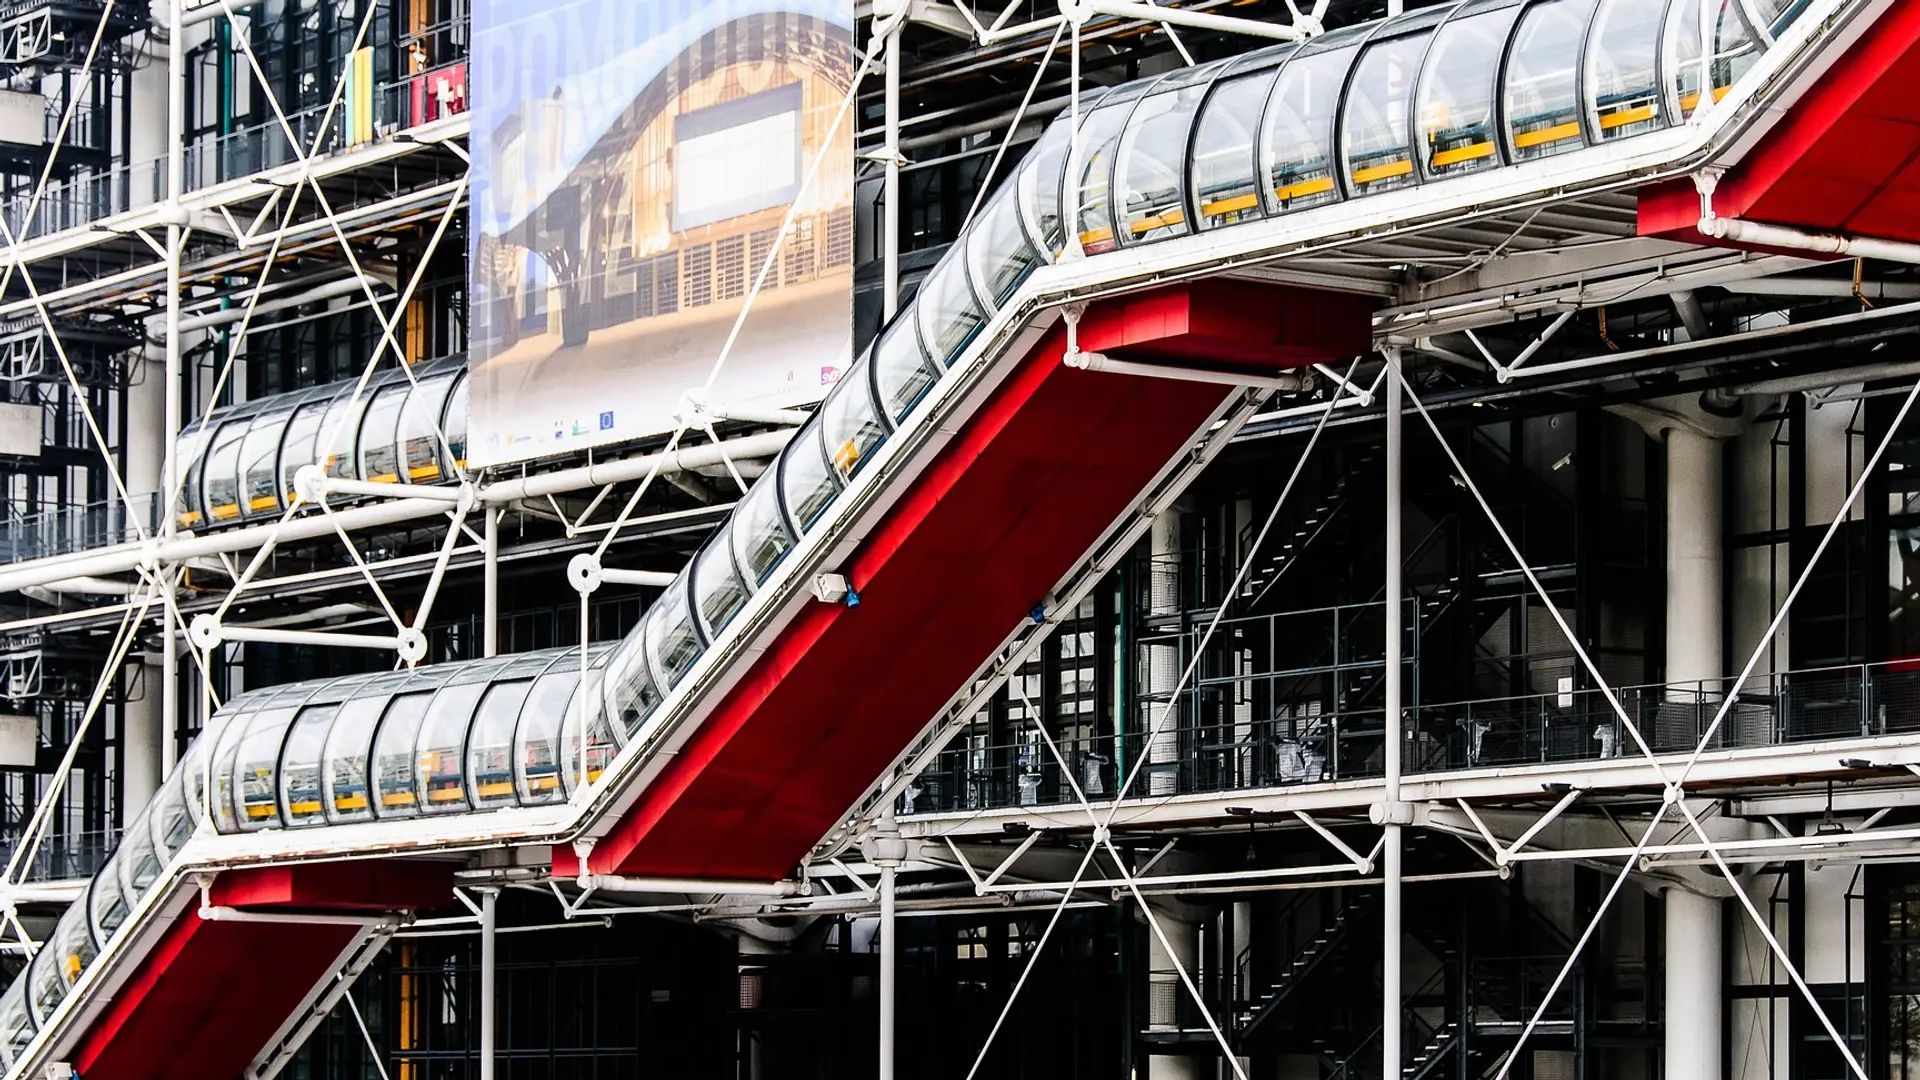 The Pompidou Centre paris